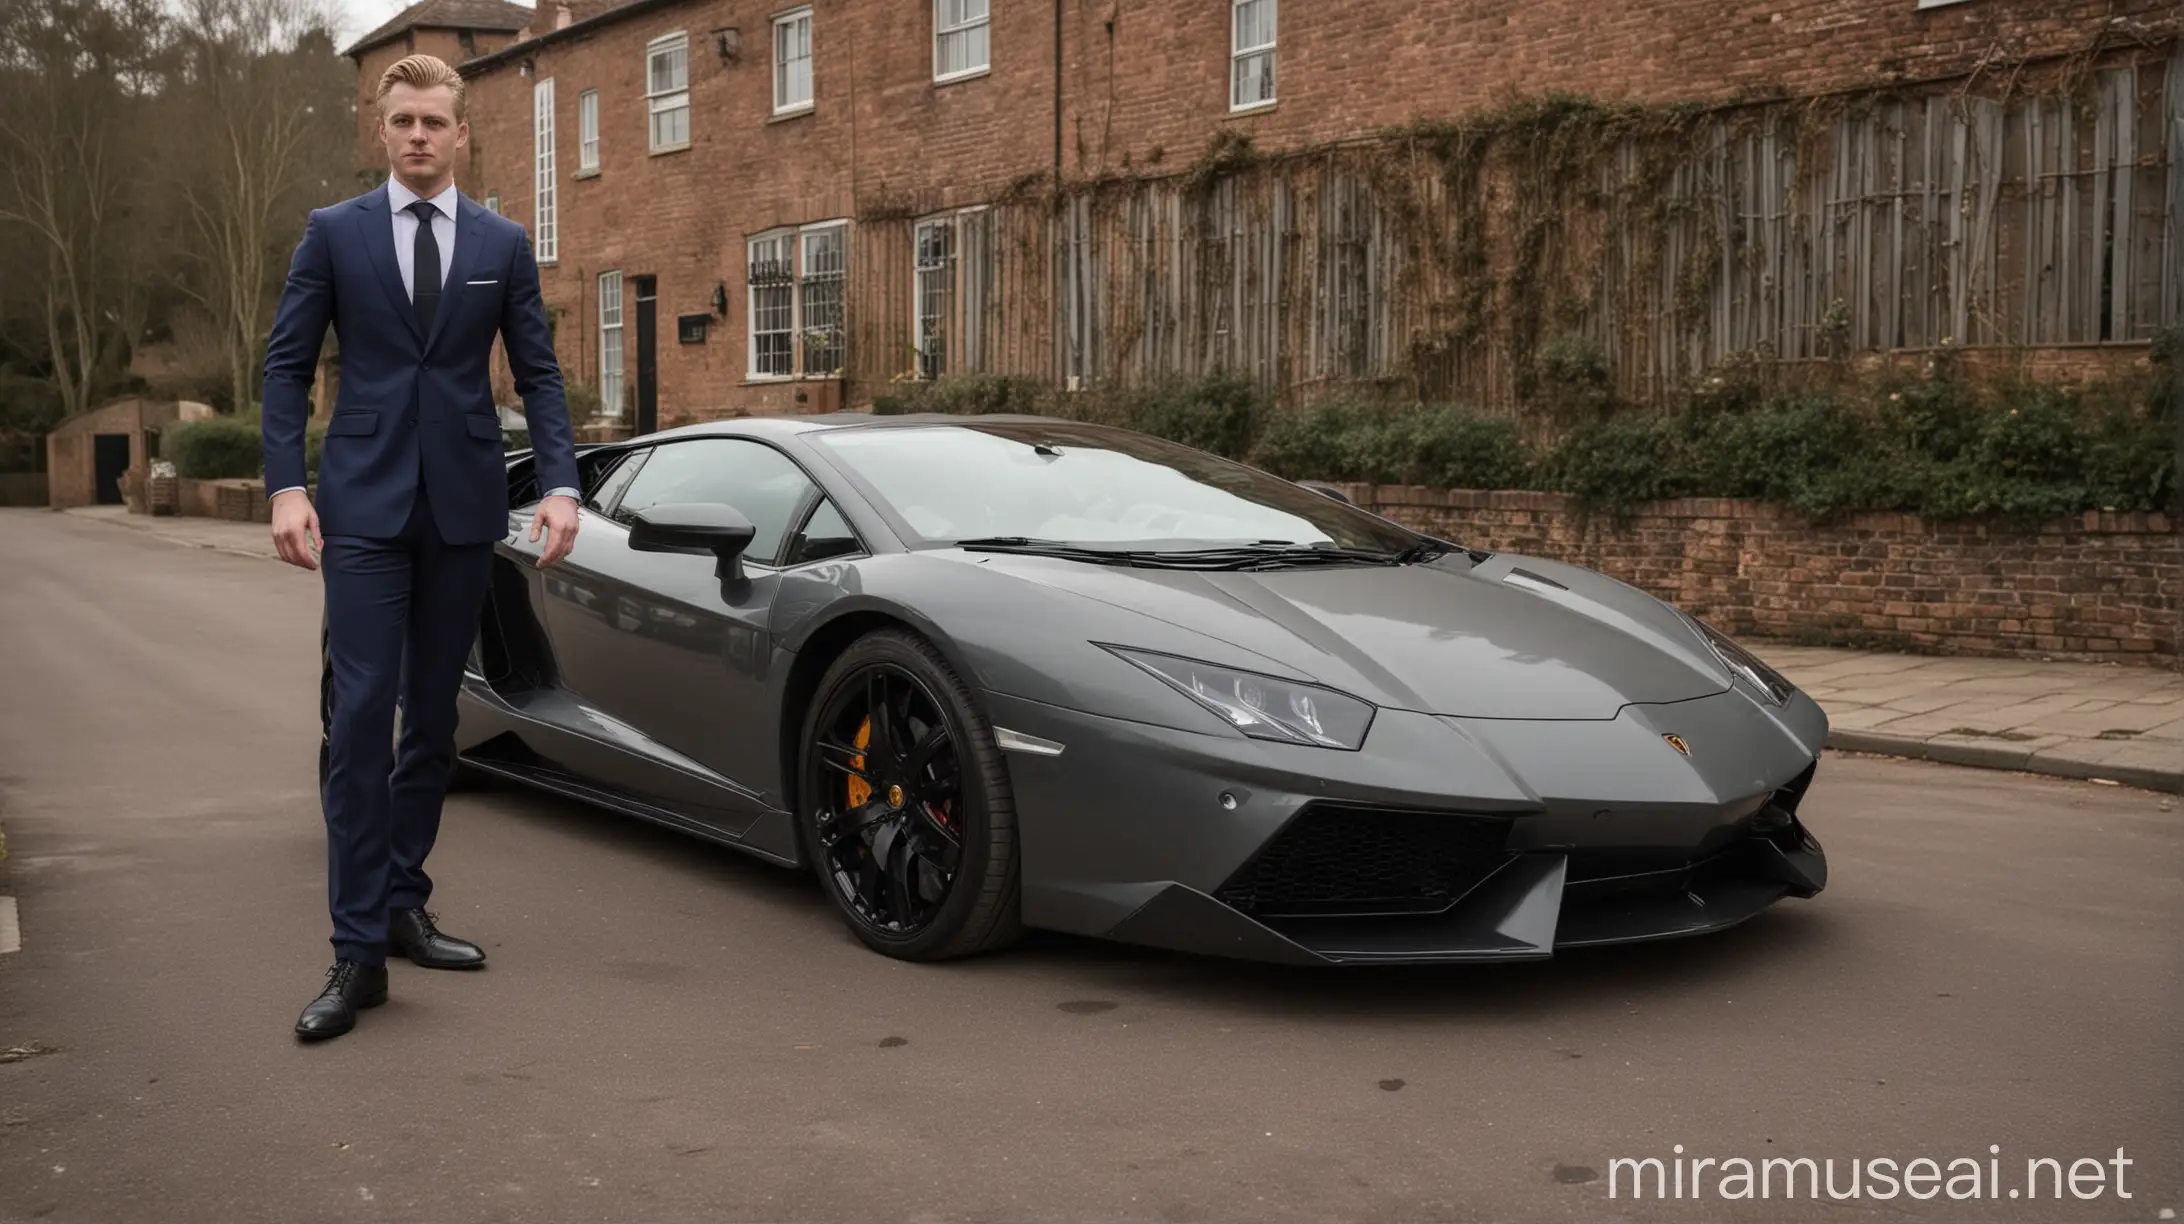 British Man in Suit Standing by Lamborghini Car